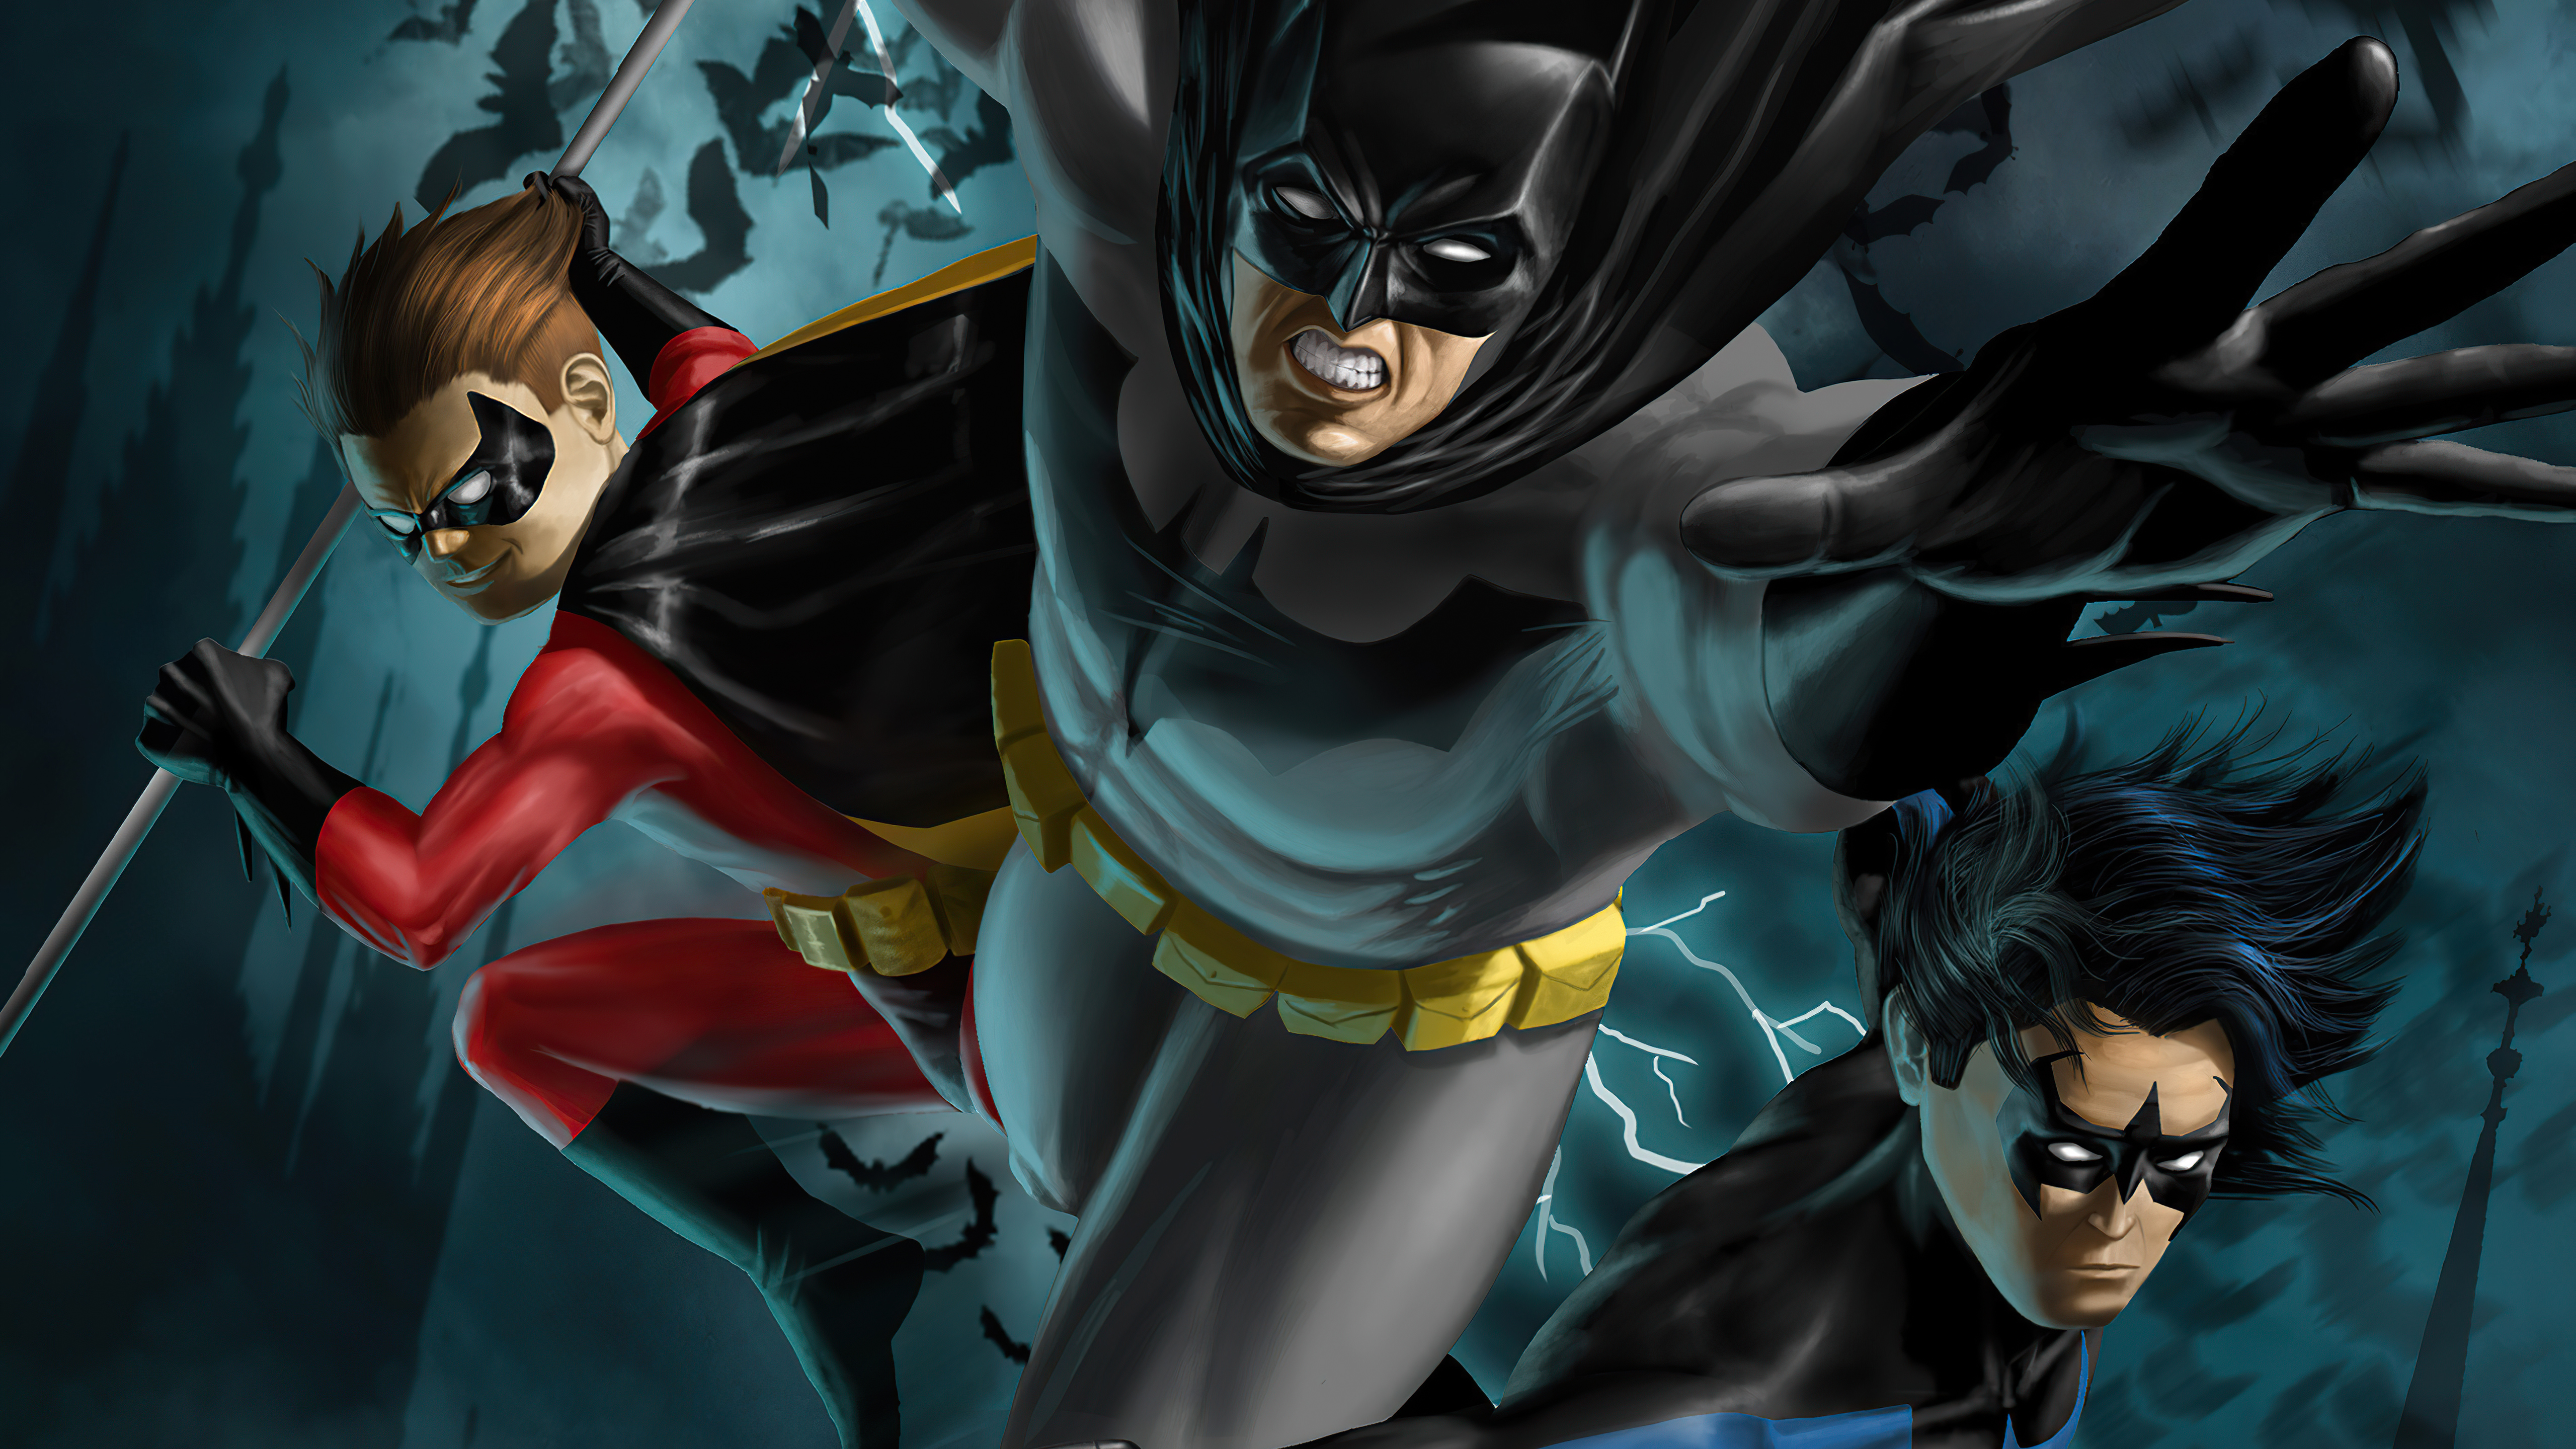 Descarga gratis la imagen Historietas, The Batman, Dc Comics, Ala Noche, Robin (Dc Cómics), Dick Grayson en el escritorio de tu PC